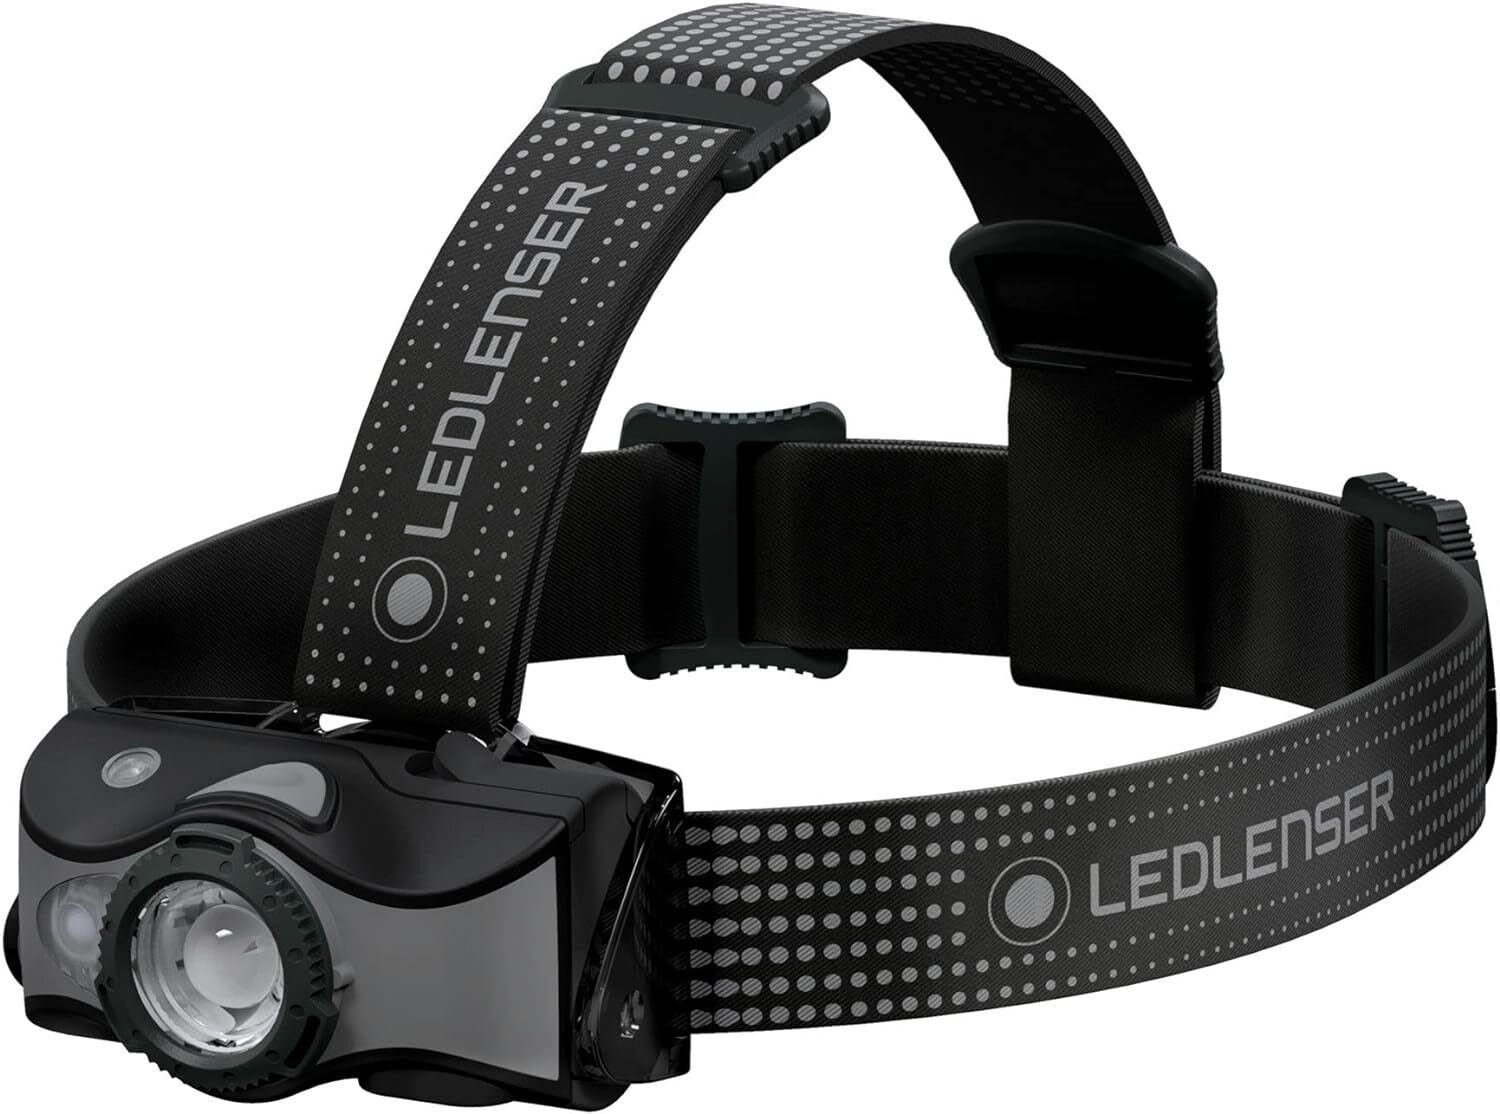 Led Lenser Ledlenser Kopflampe MH7 LED, Inklusive Batterien, Wasserdicht, Wiederaufladbar *